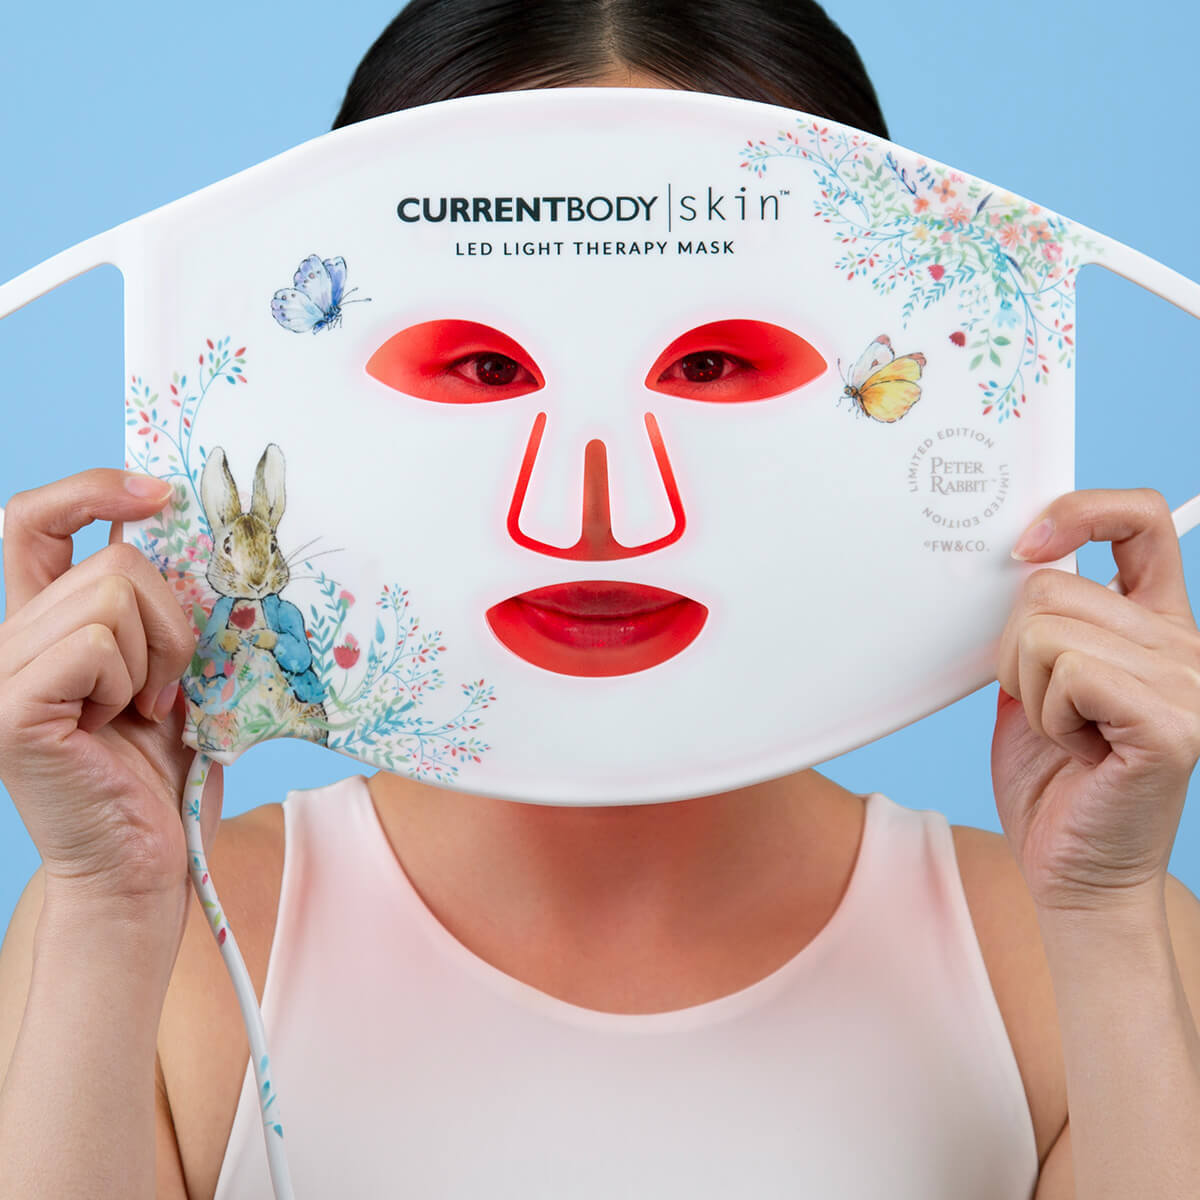 CURRENTBODY skin LED ライト セラピー マスク